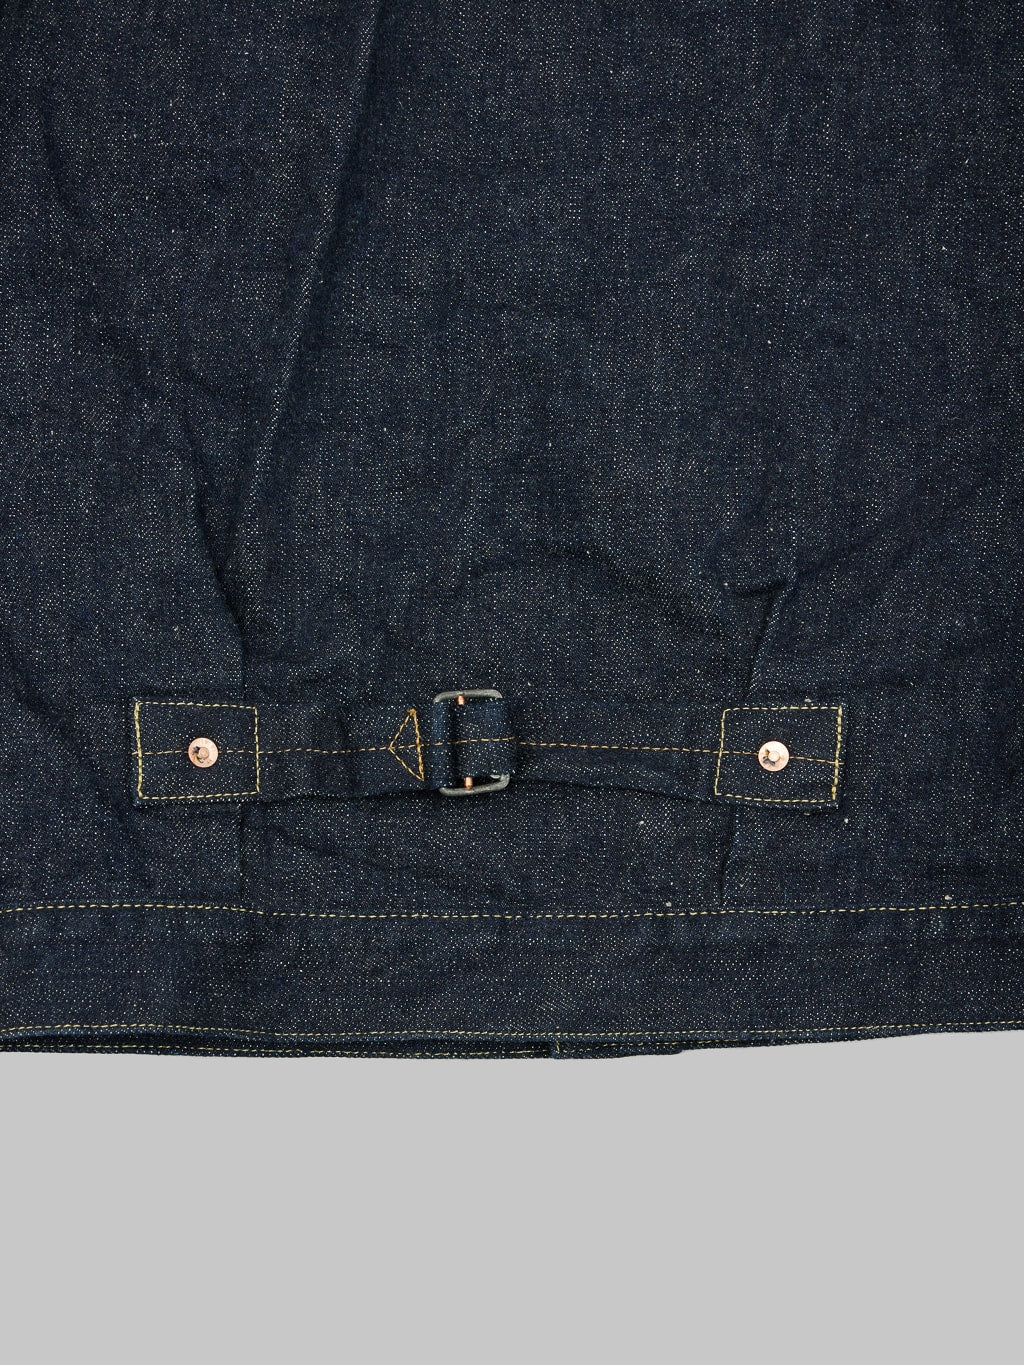 ONI Natural Indigo Rope Dyeing Denim Type I Jacket details